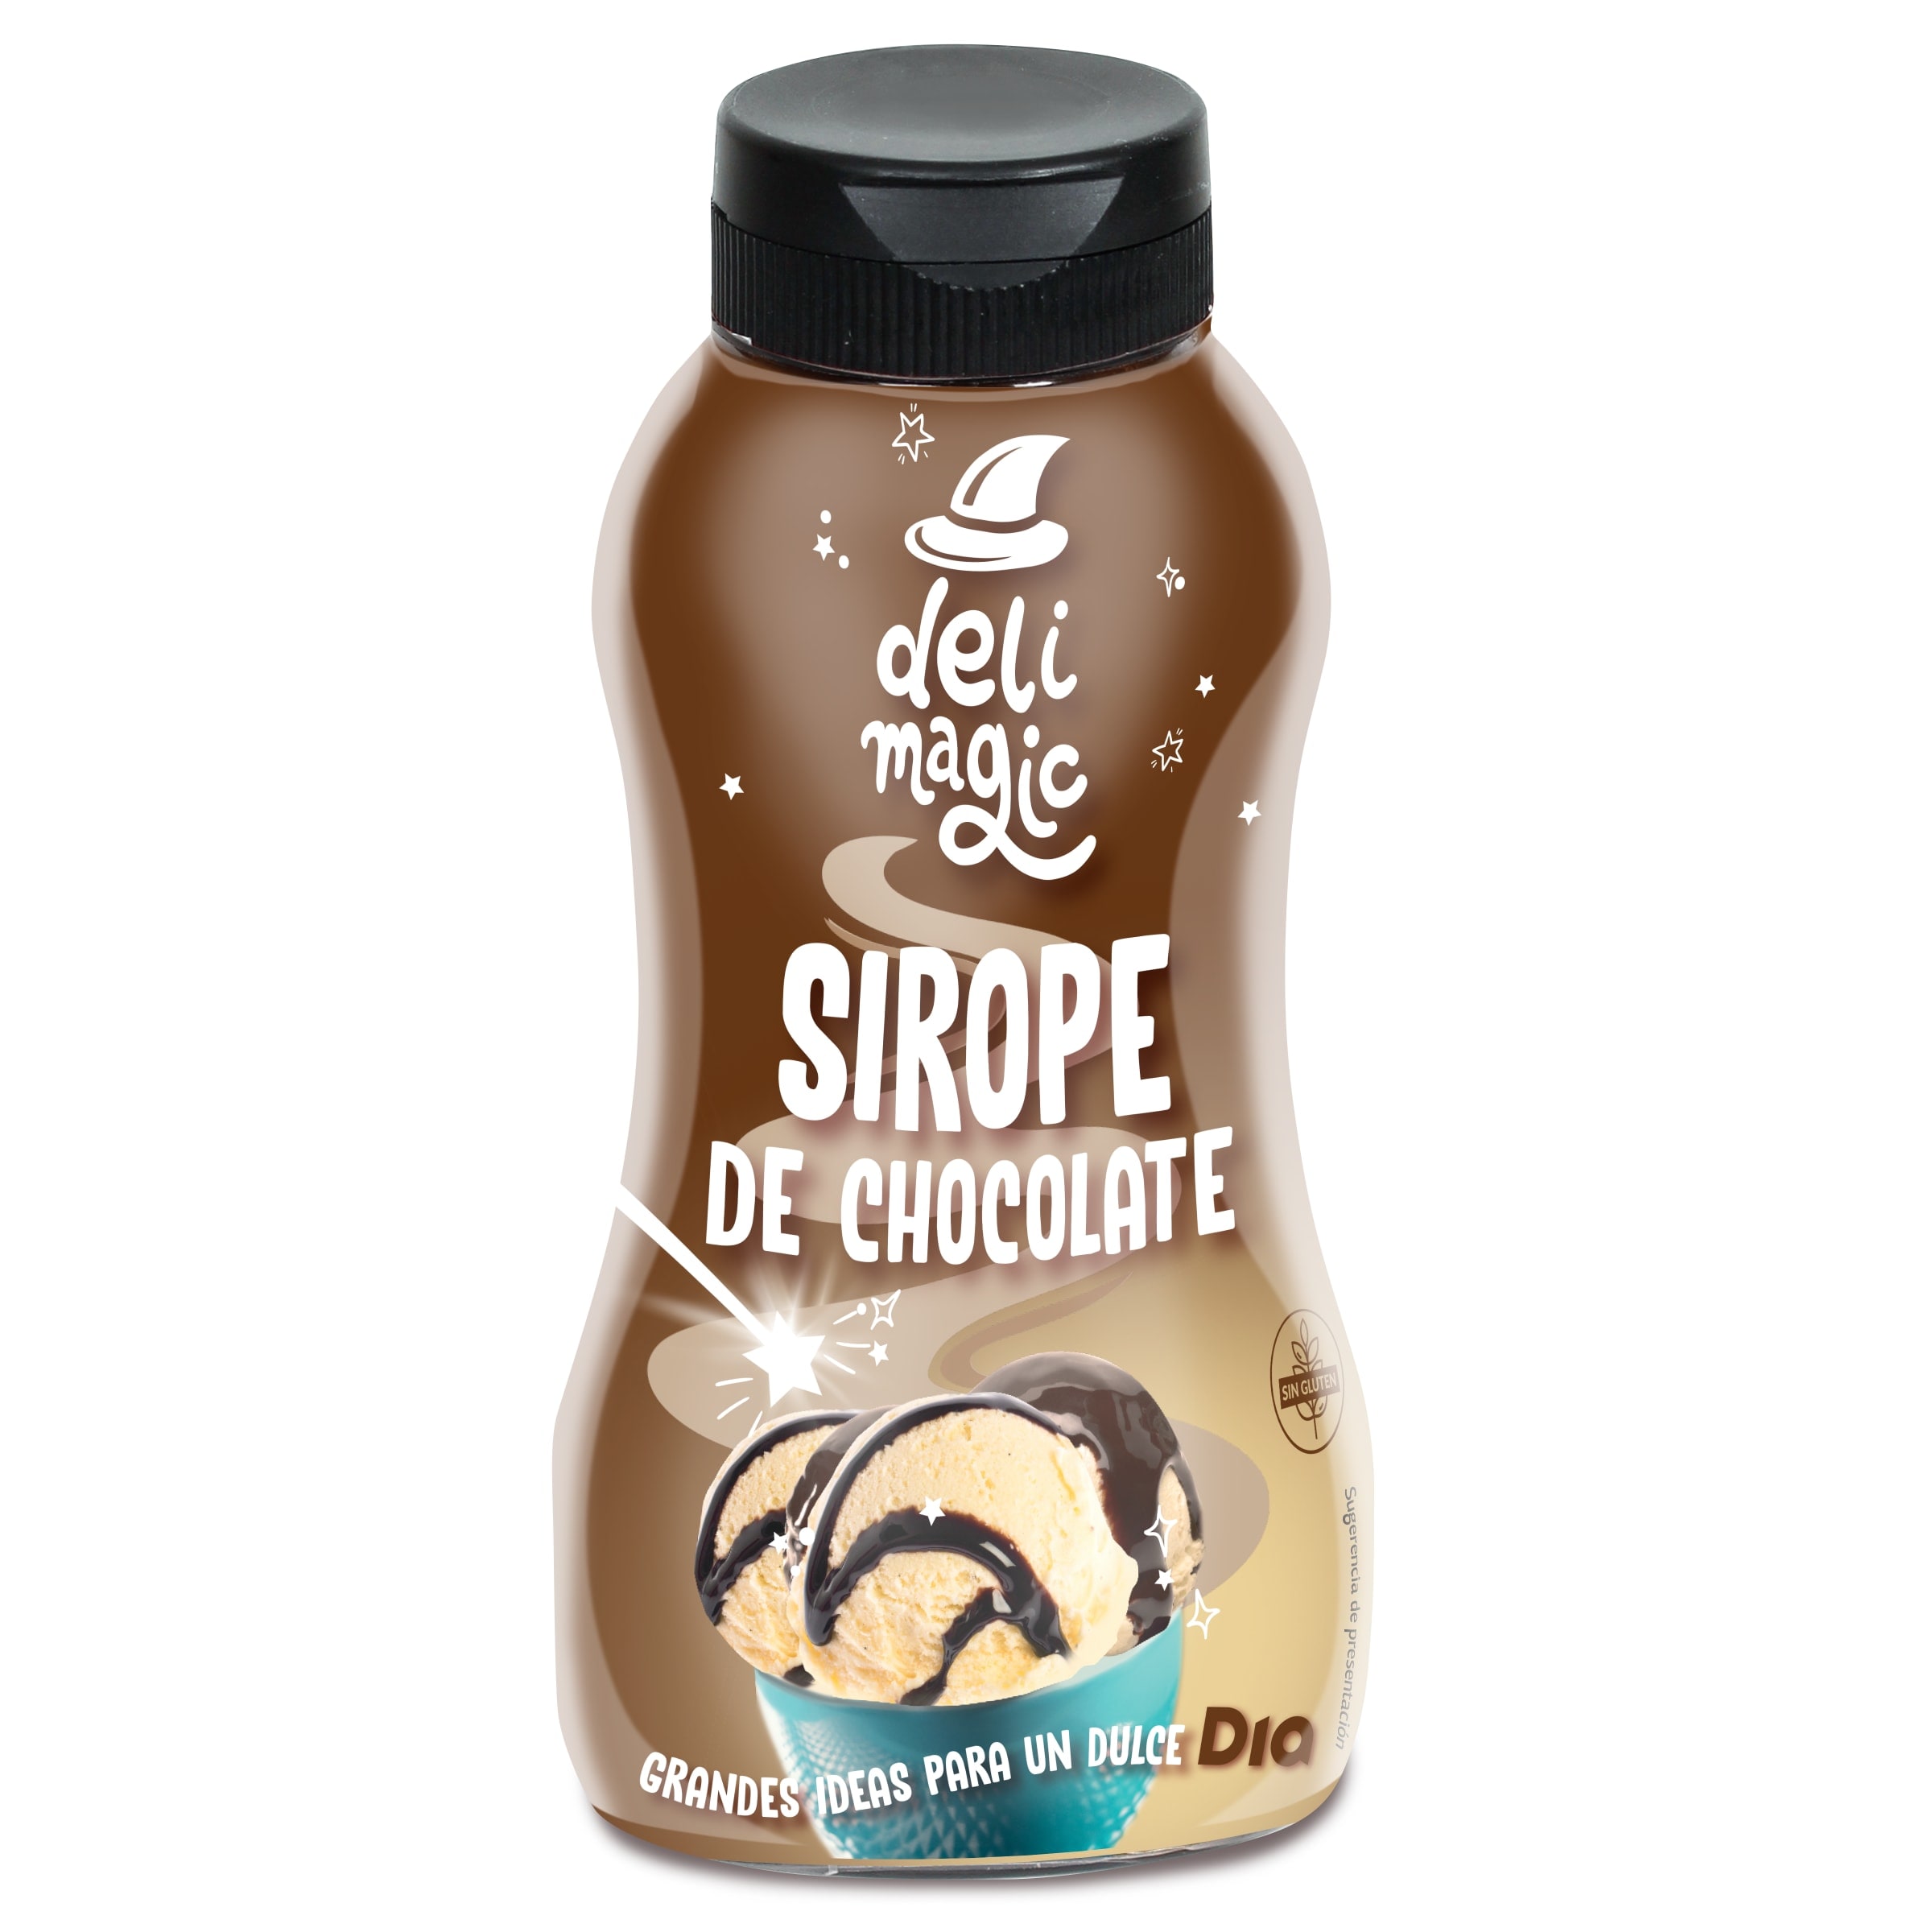 Sirope de chocolate Delimagic botella 295 g - Supermercados DIA